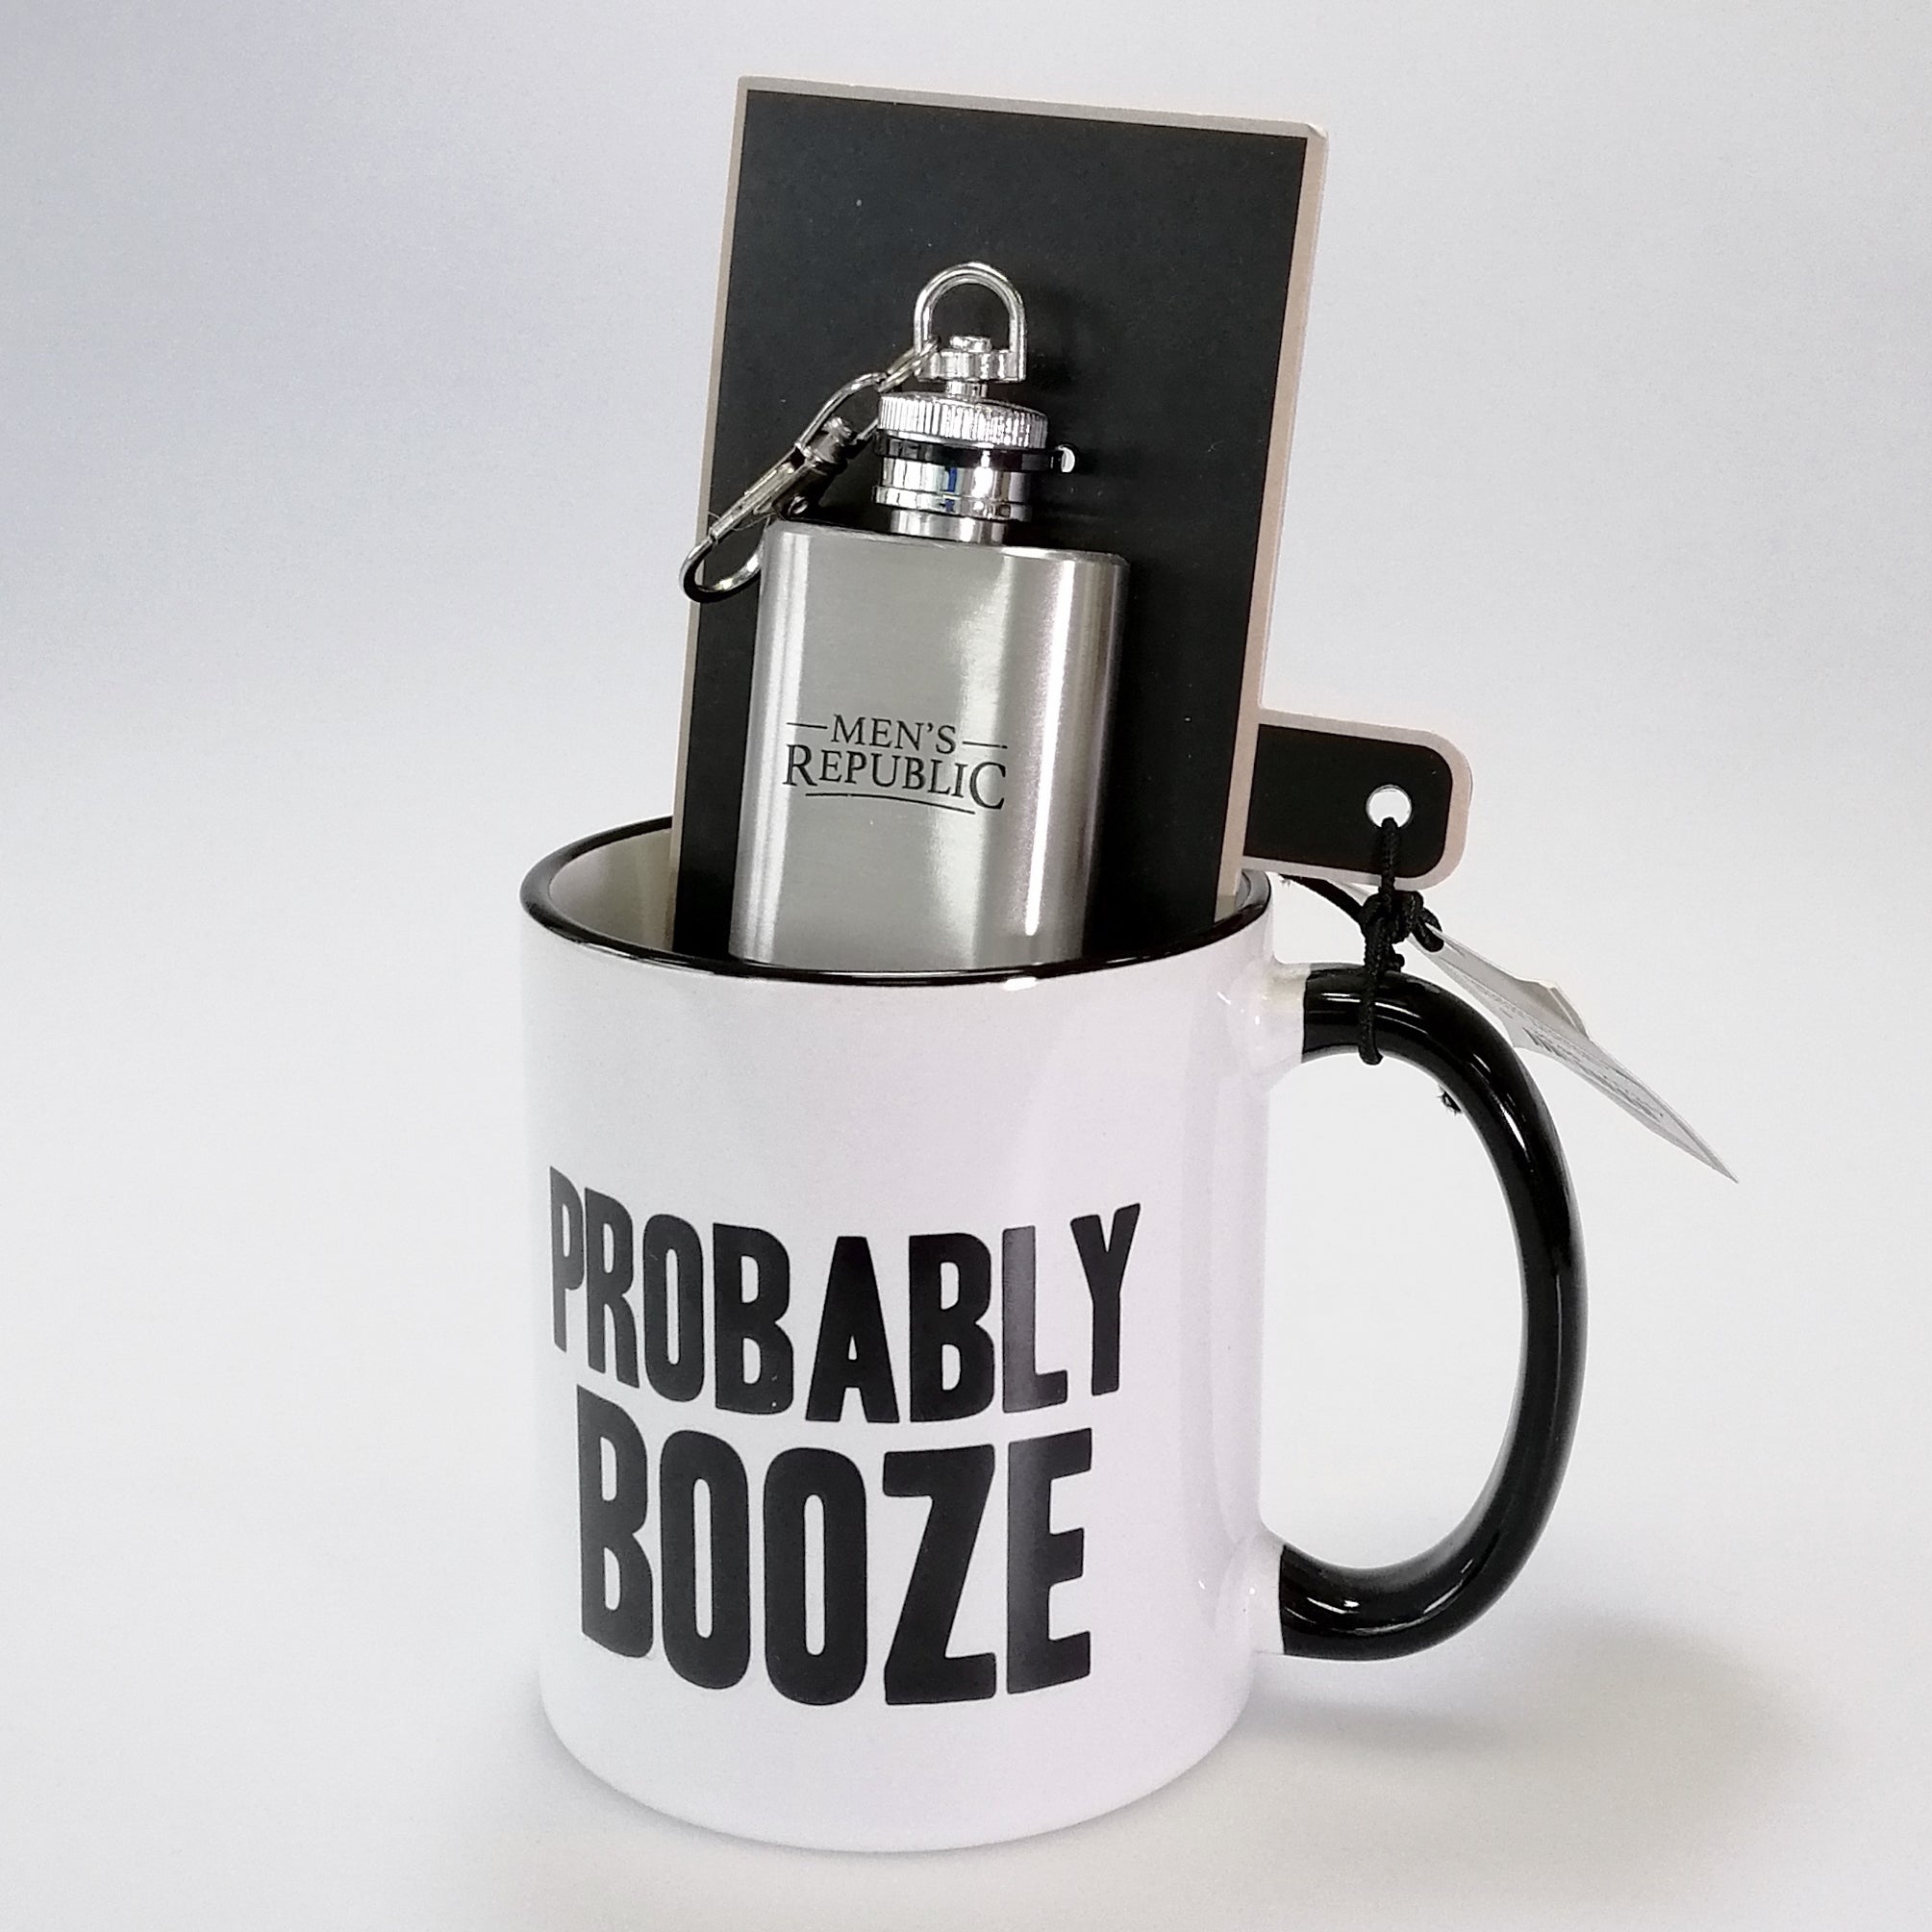 Probably Booze Mug & Mini Flask Set